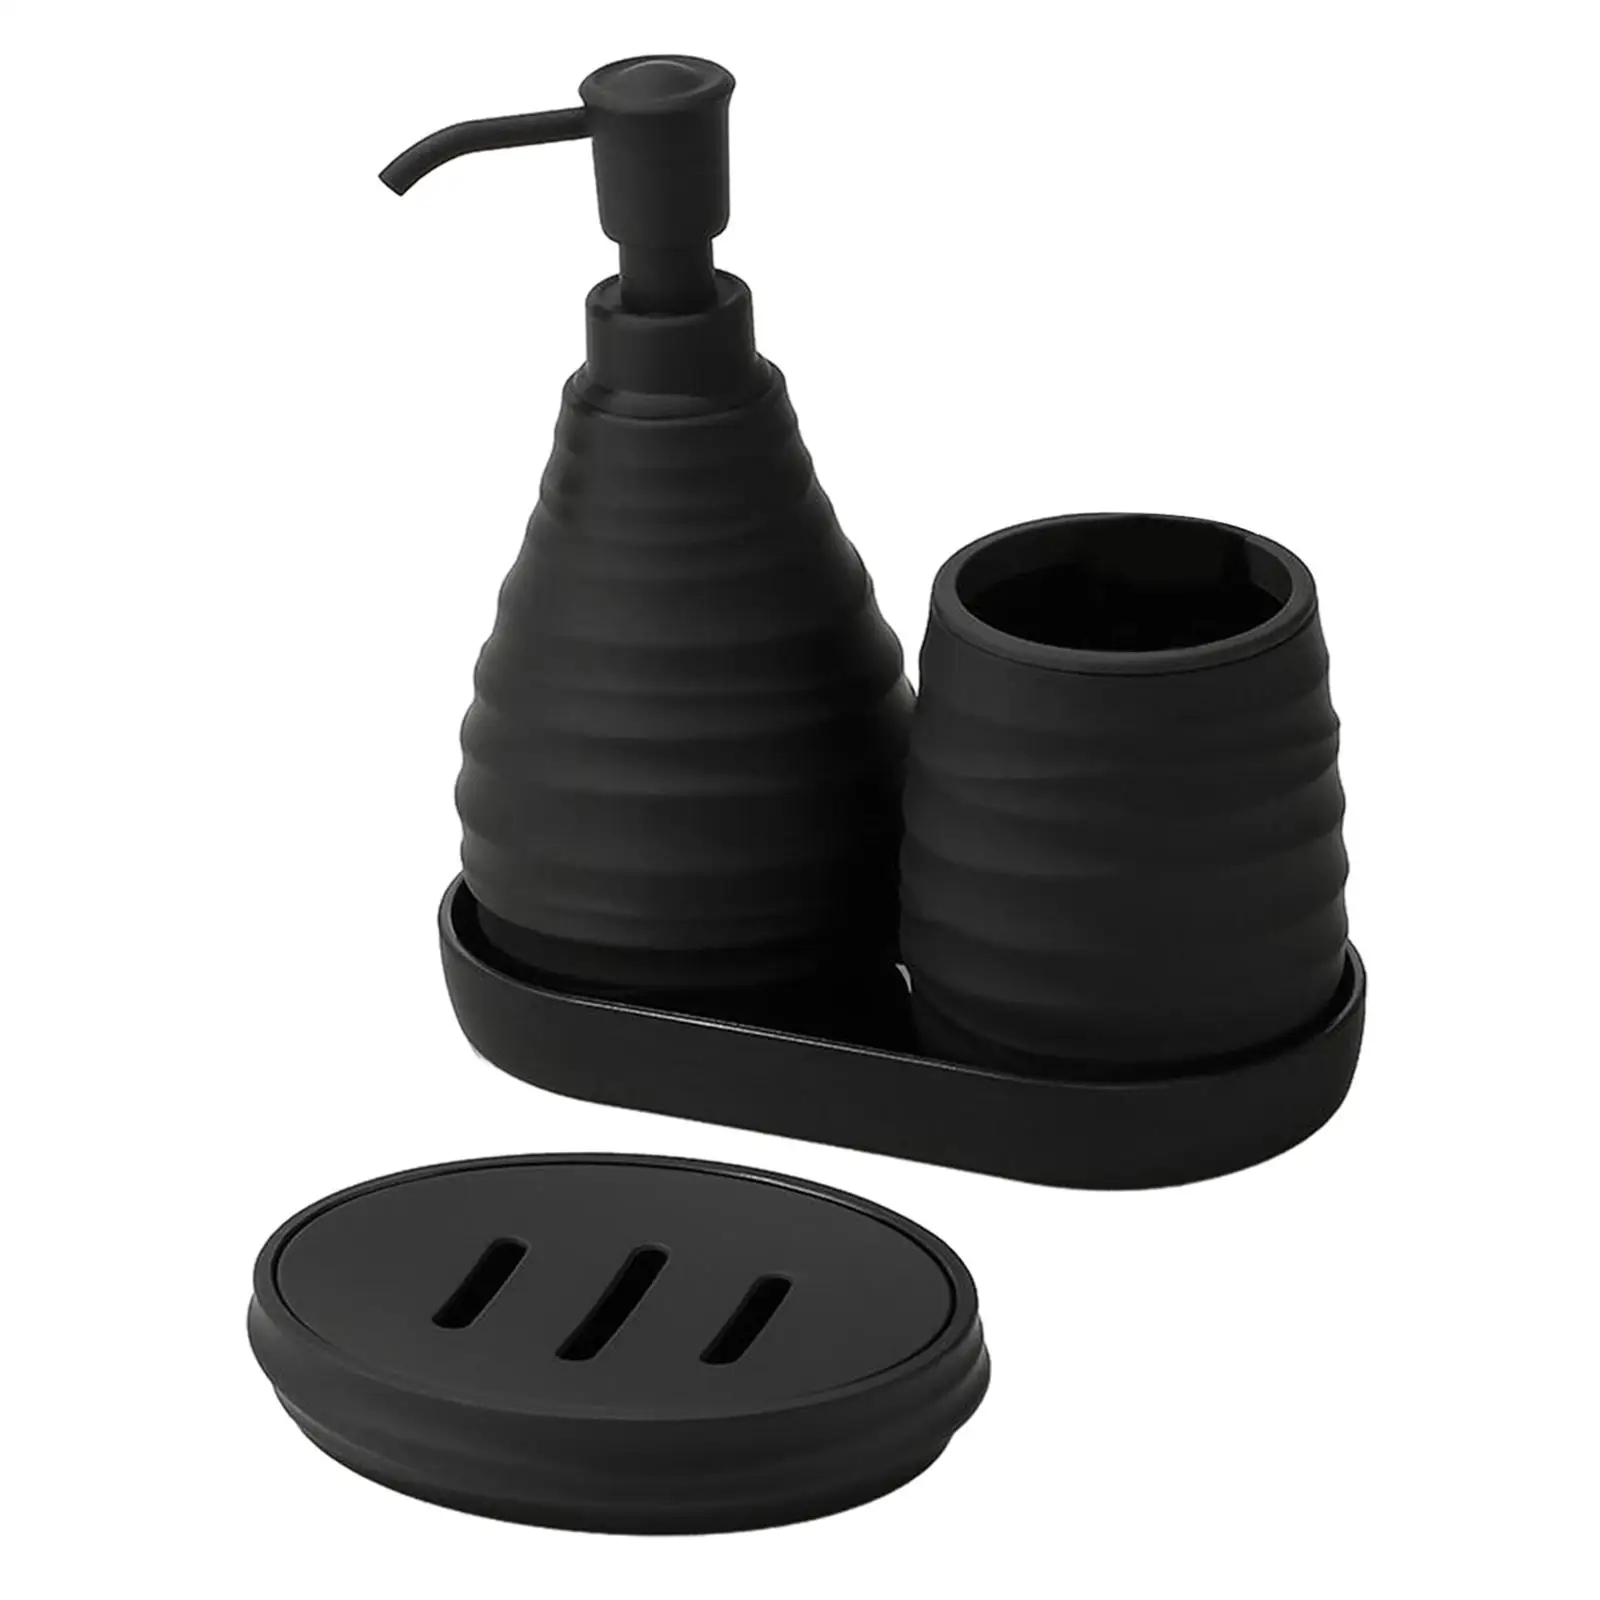 4Pcs Bathroom Accessories Set Bathroom Decor Include Lotion Dispenser Soap Dish Toothbrush Cup and Holder Bath Set Modern Design